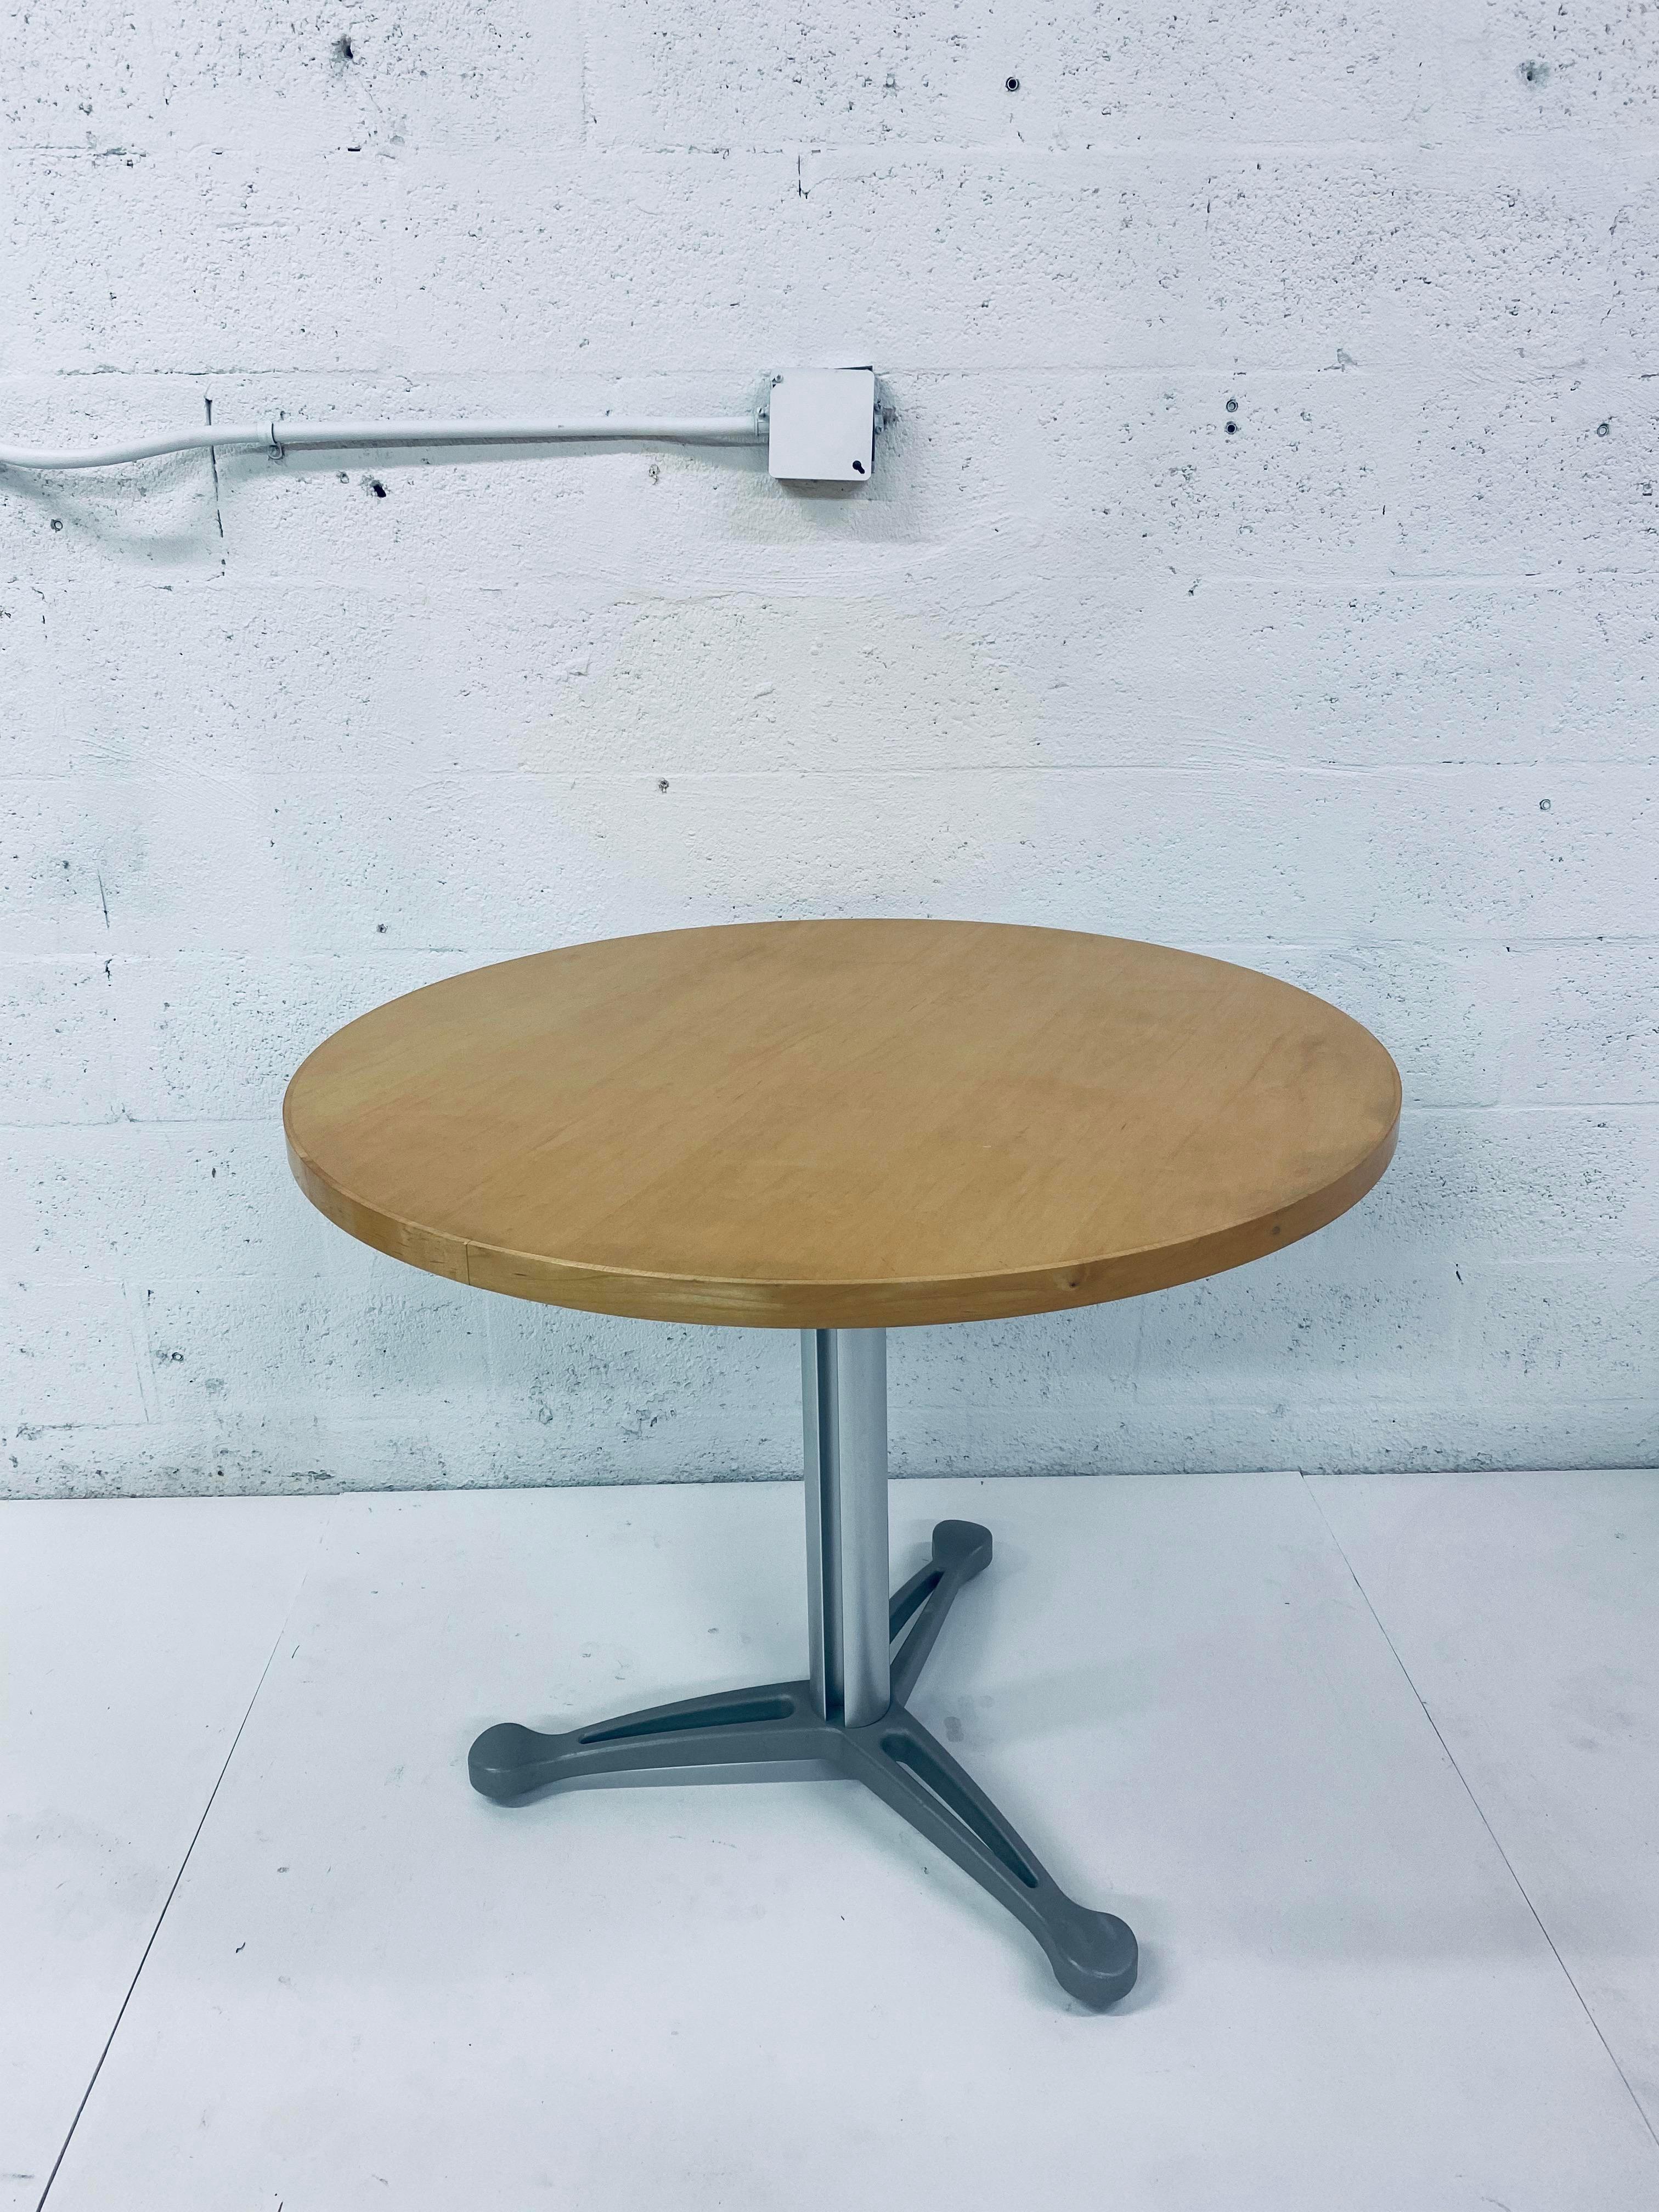 Emanuela Frattini “Propeller” Table for Knoll For Sale 2